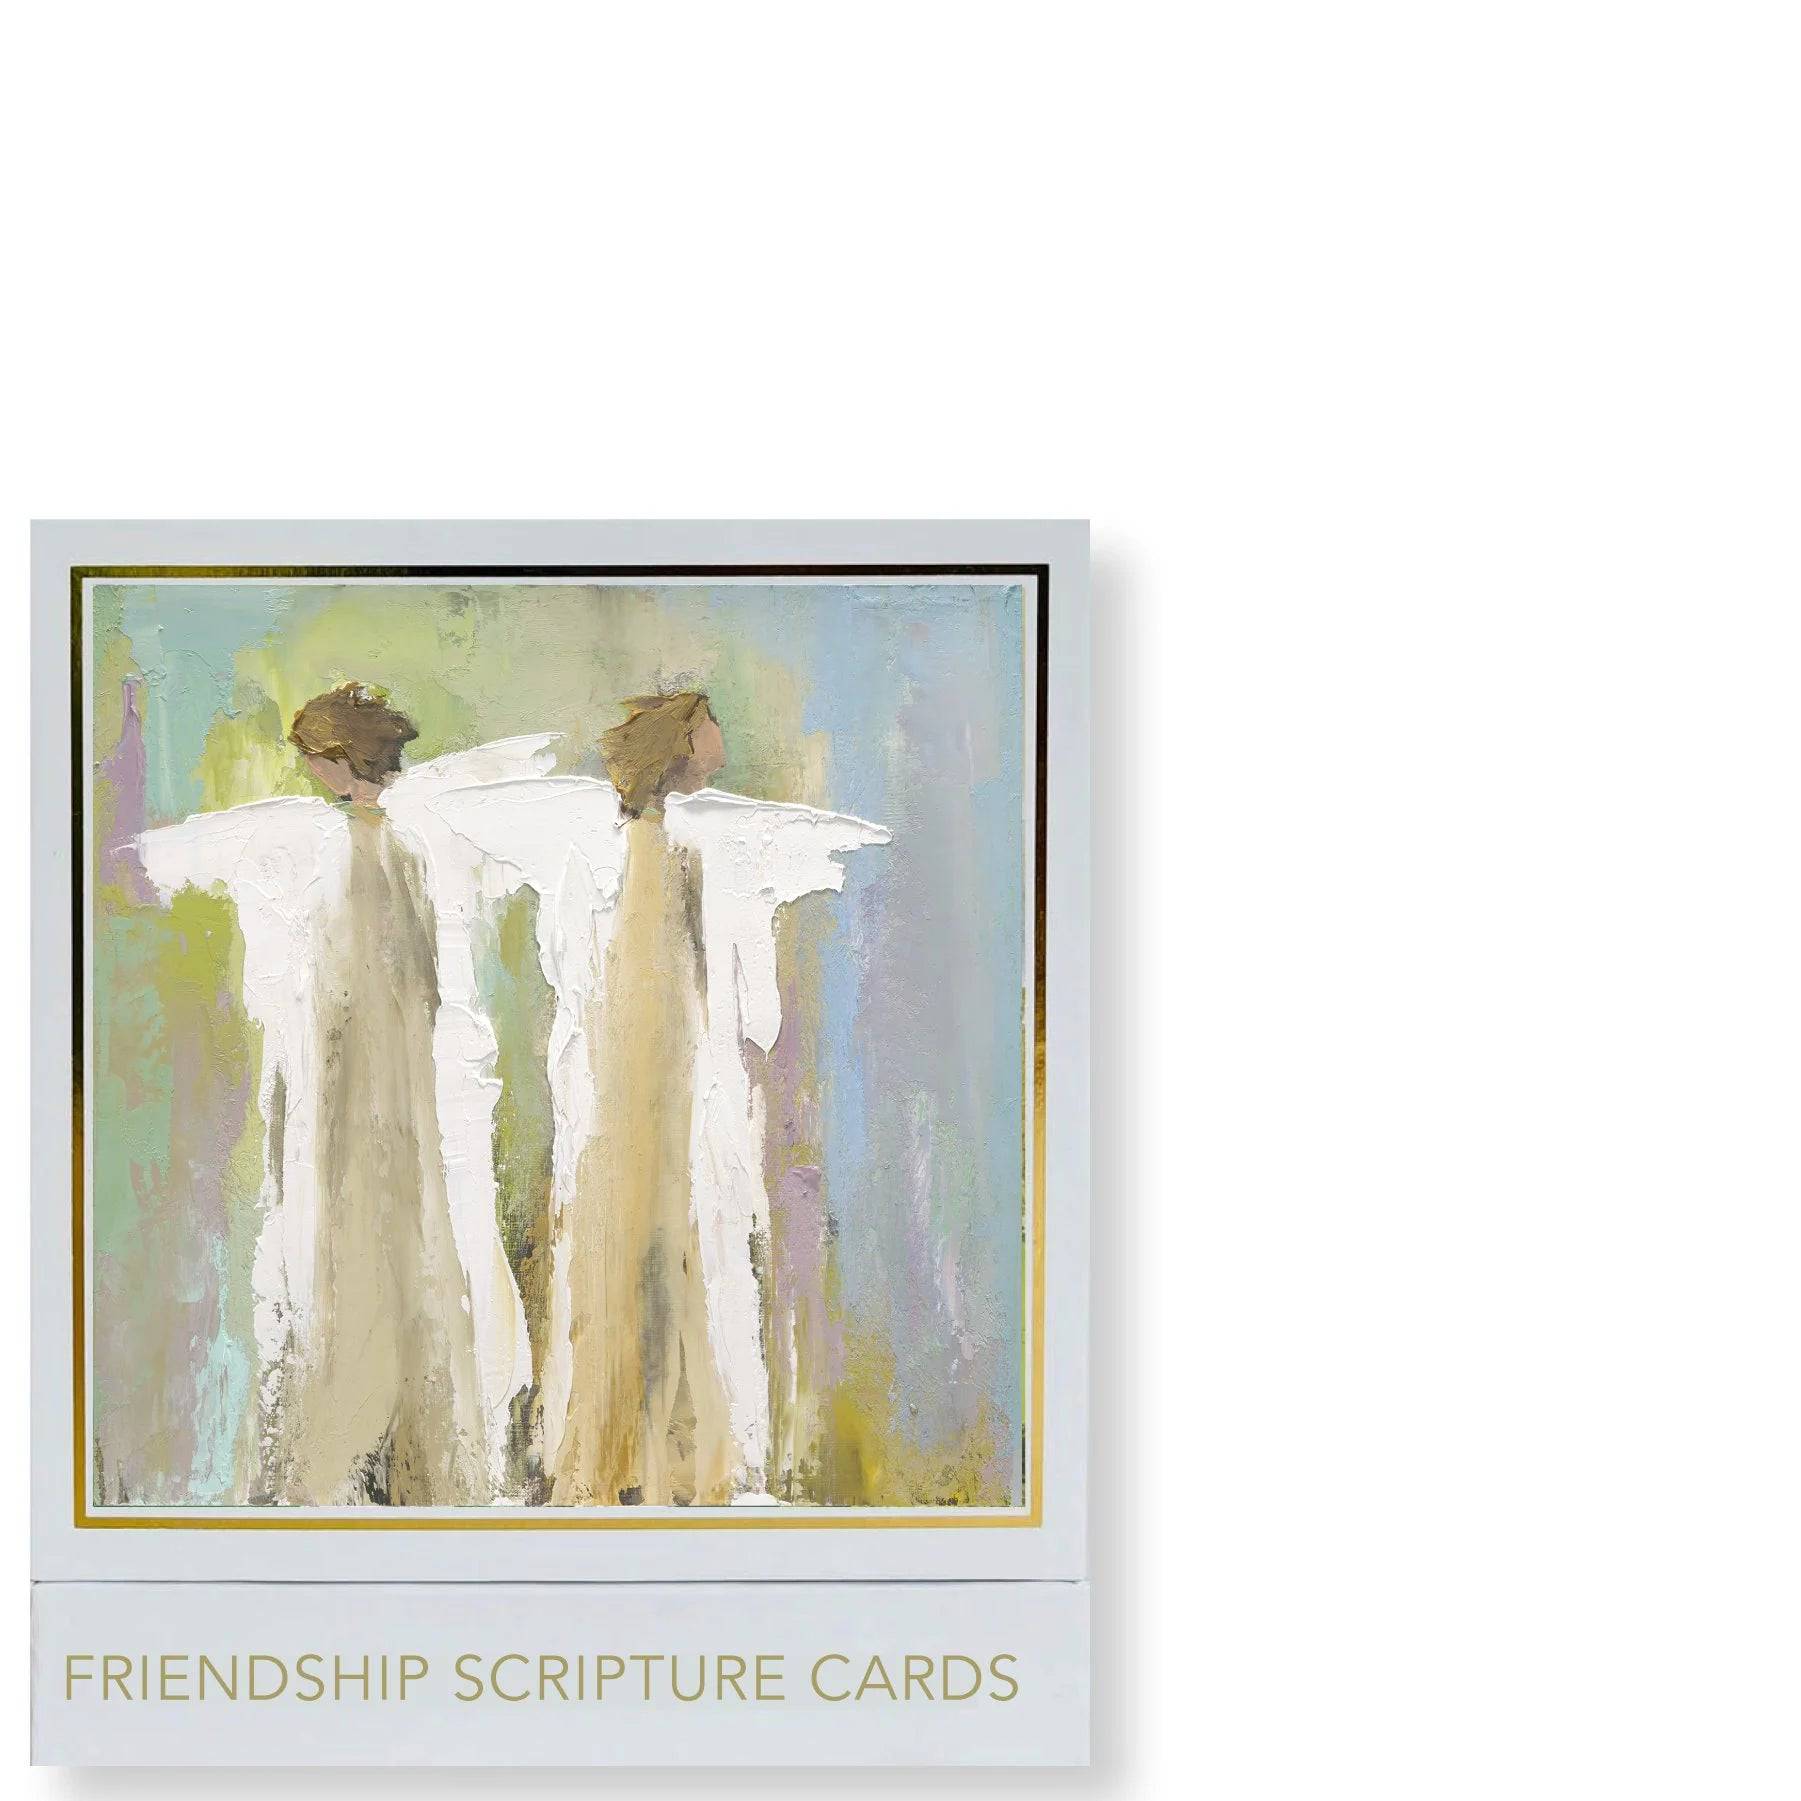 Friendship Scripture Cards - The Preppy Bunny